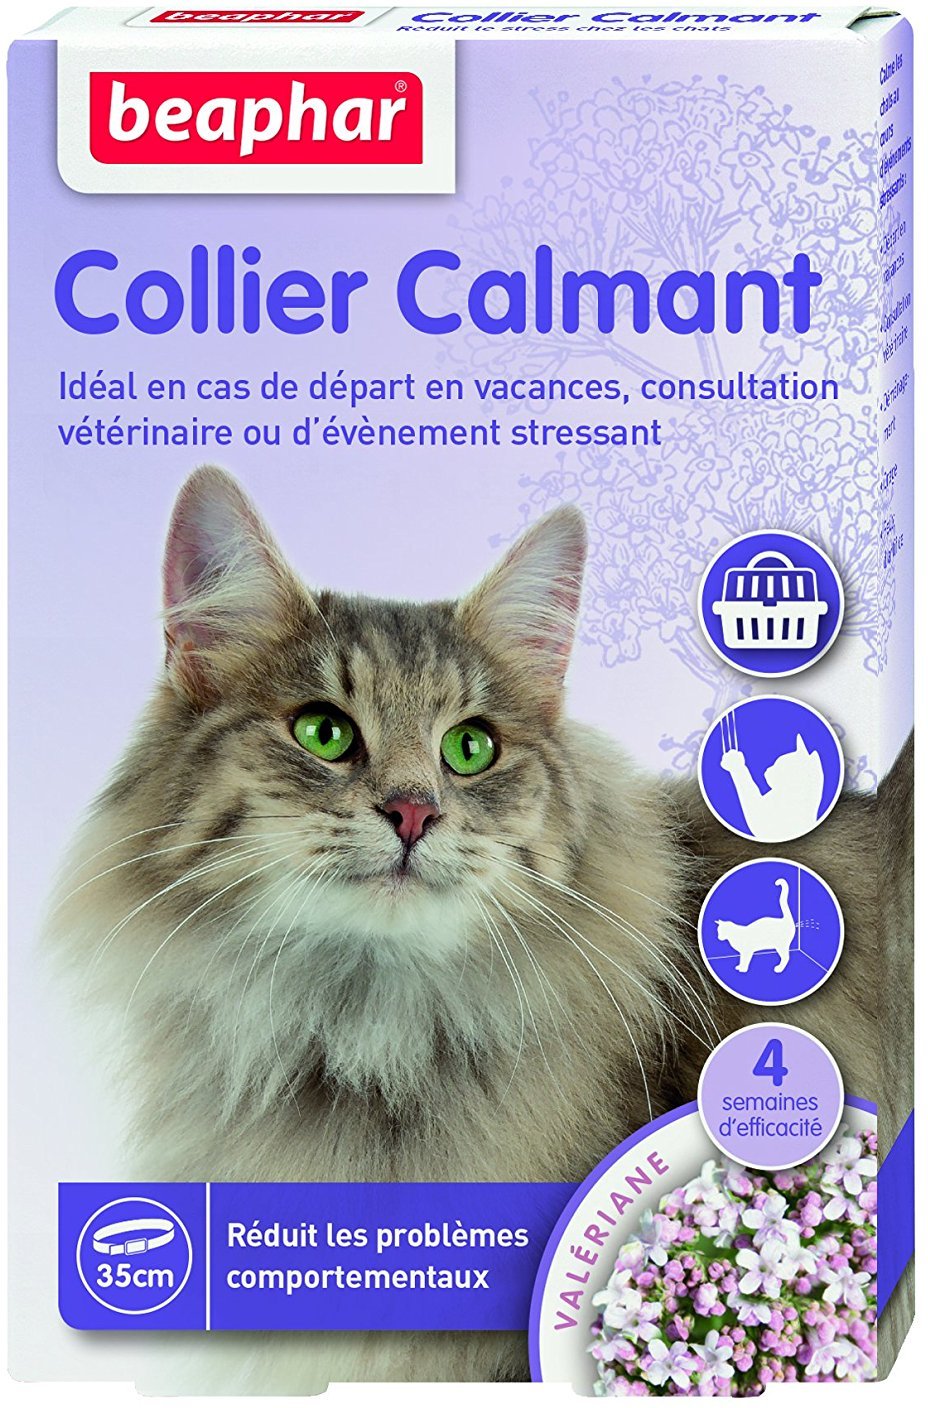 Beaphar Collier Calmant pentru pisici